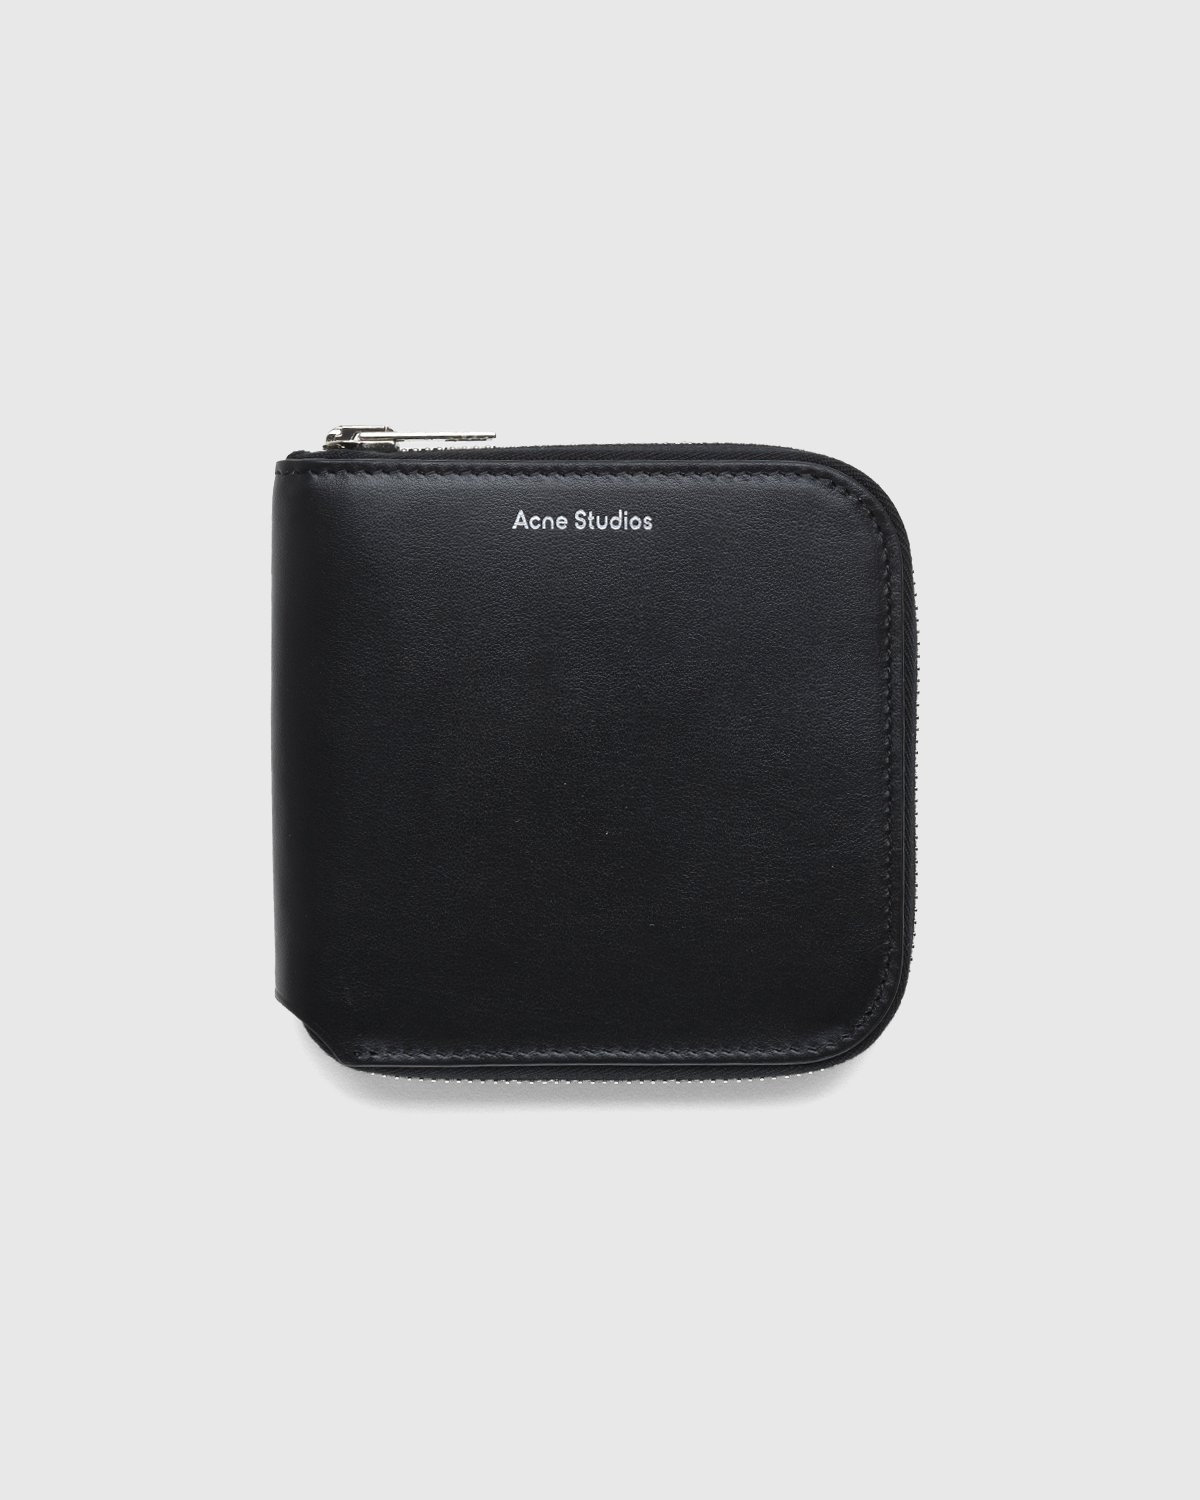 Acne Studios - Zippered Wallet Black - Accessories - Black - Image 1